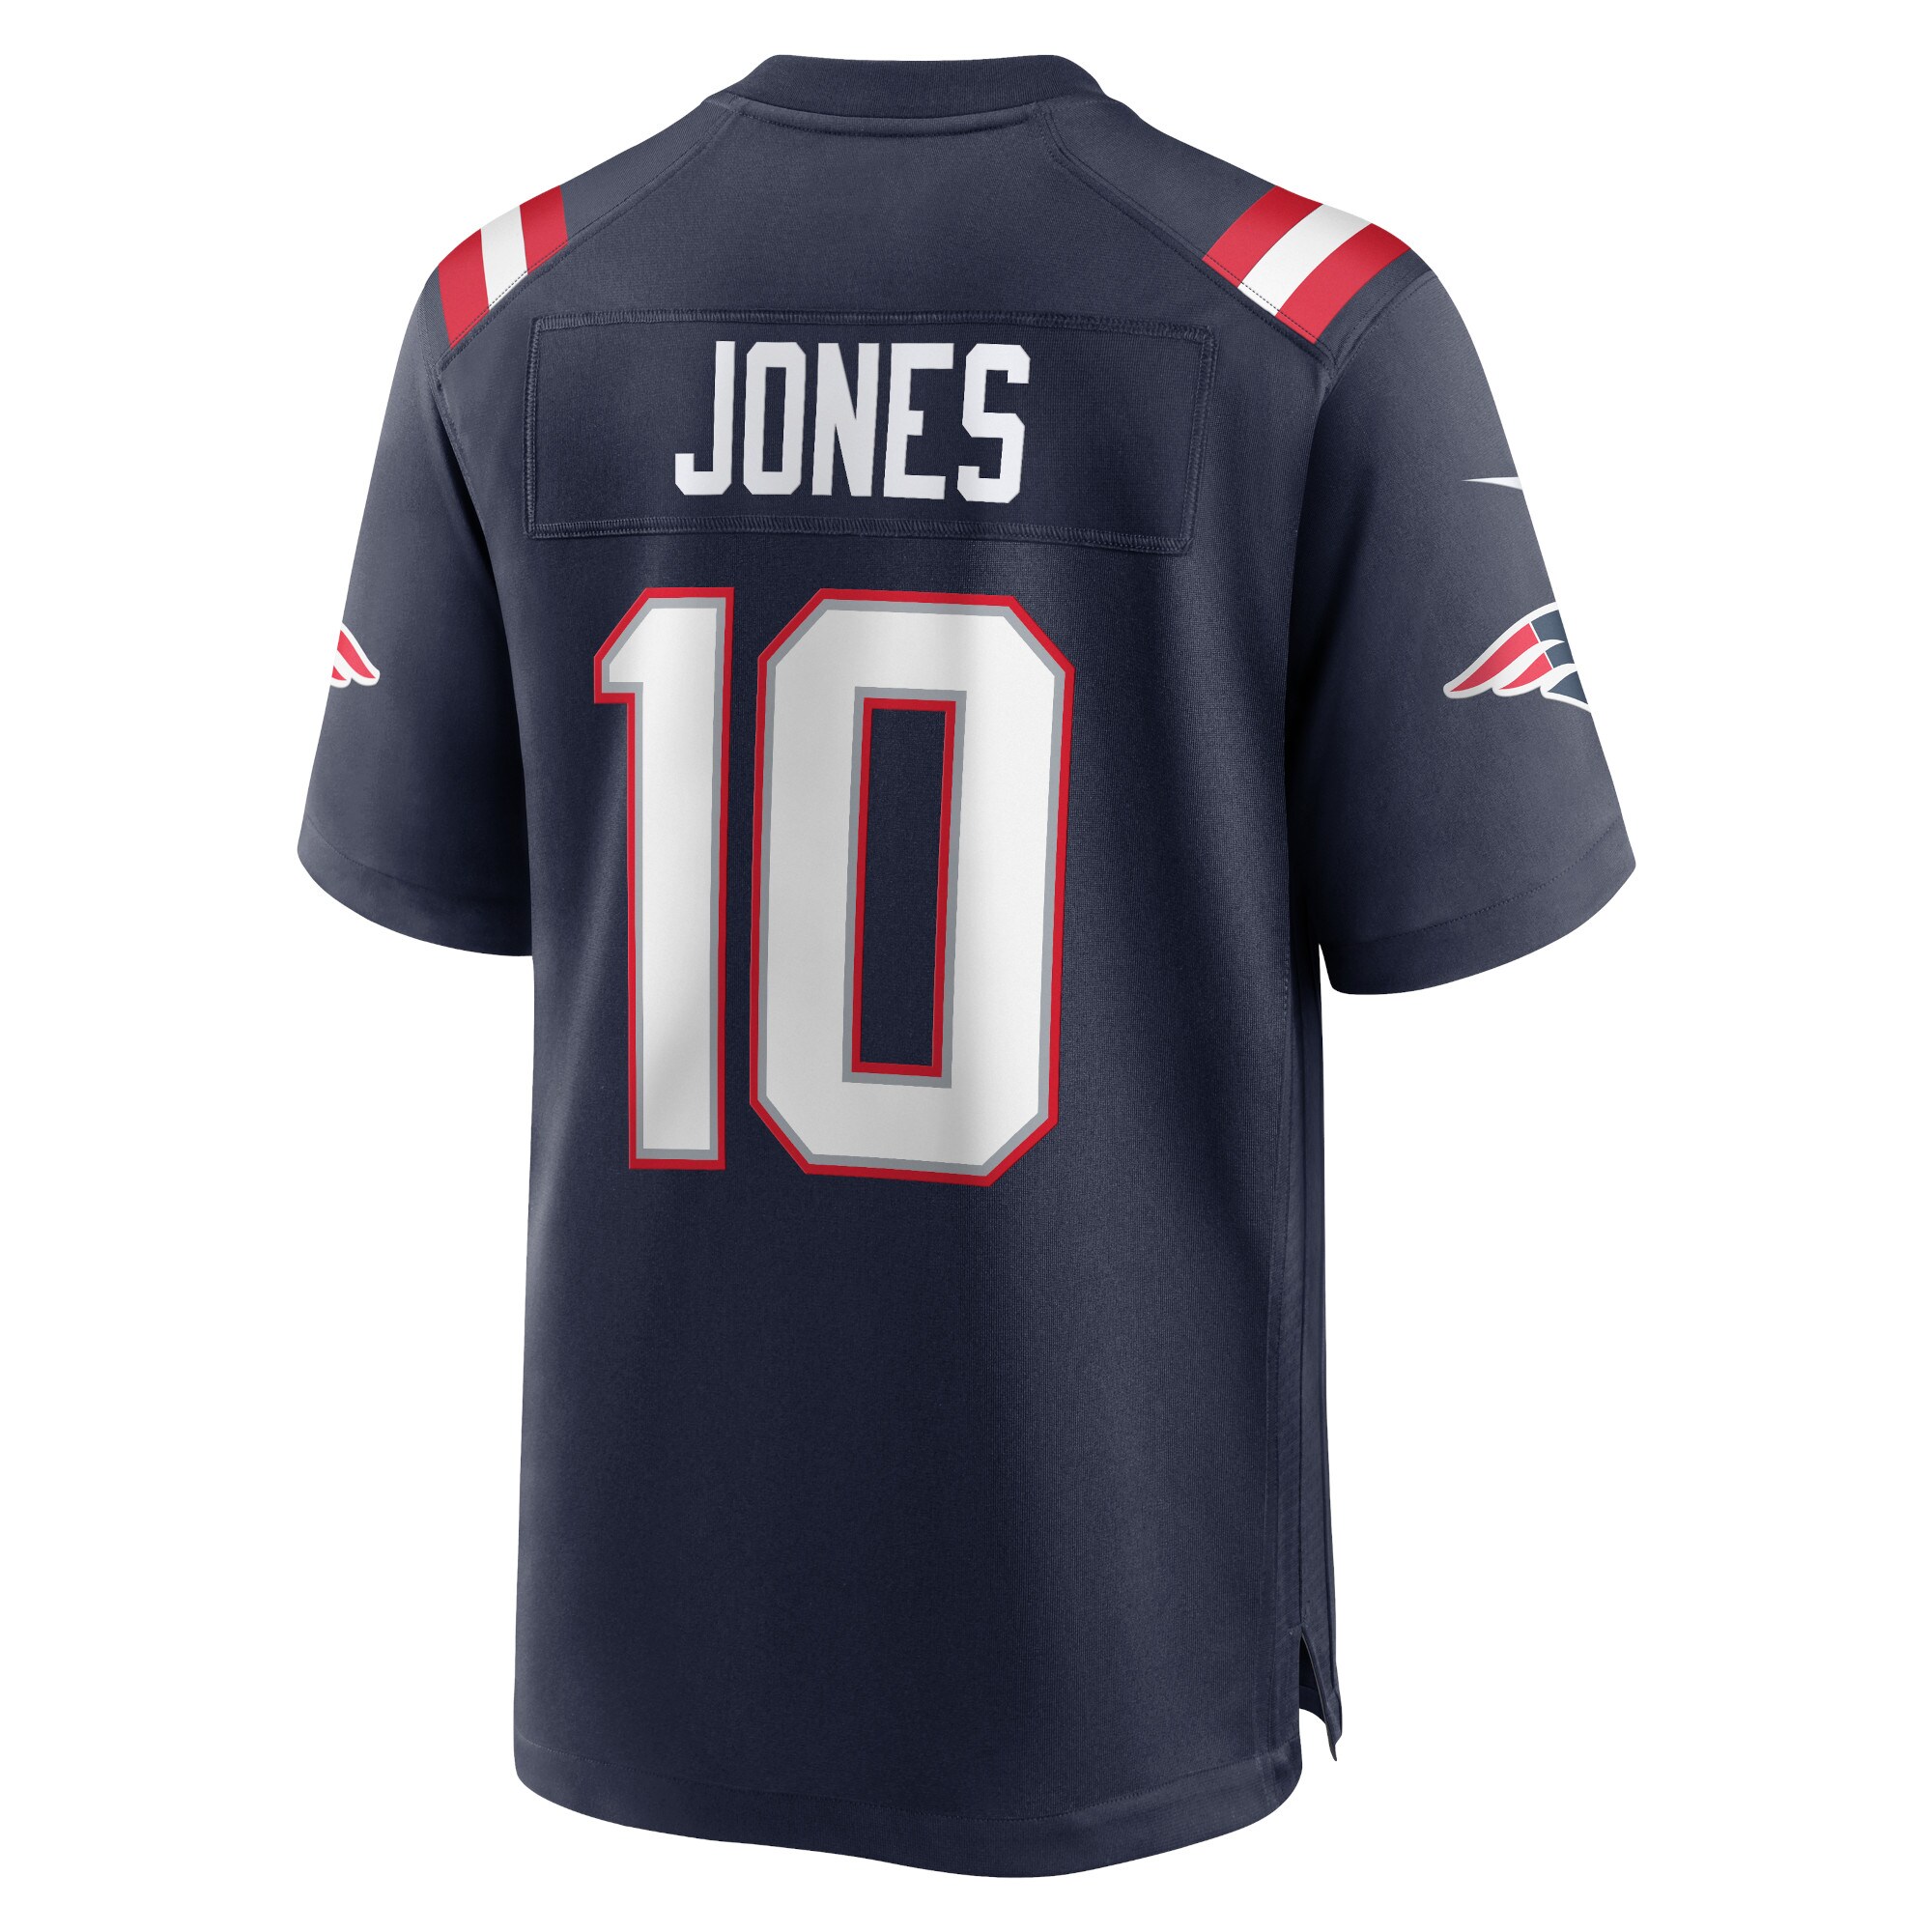 Men's New England Patriots Mac Jones Nike Navy 2021 NFL Draft First Round Pick Game Jersey